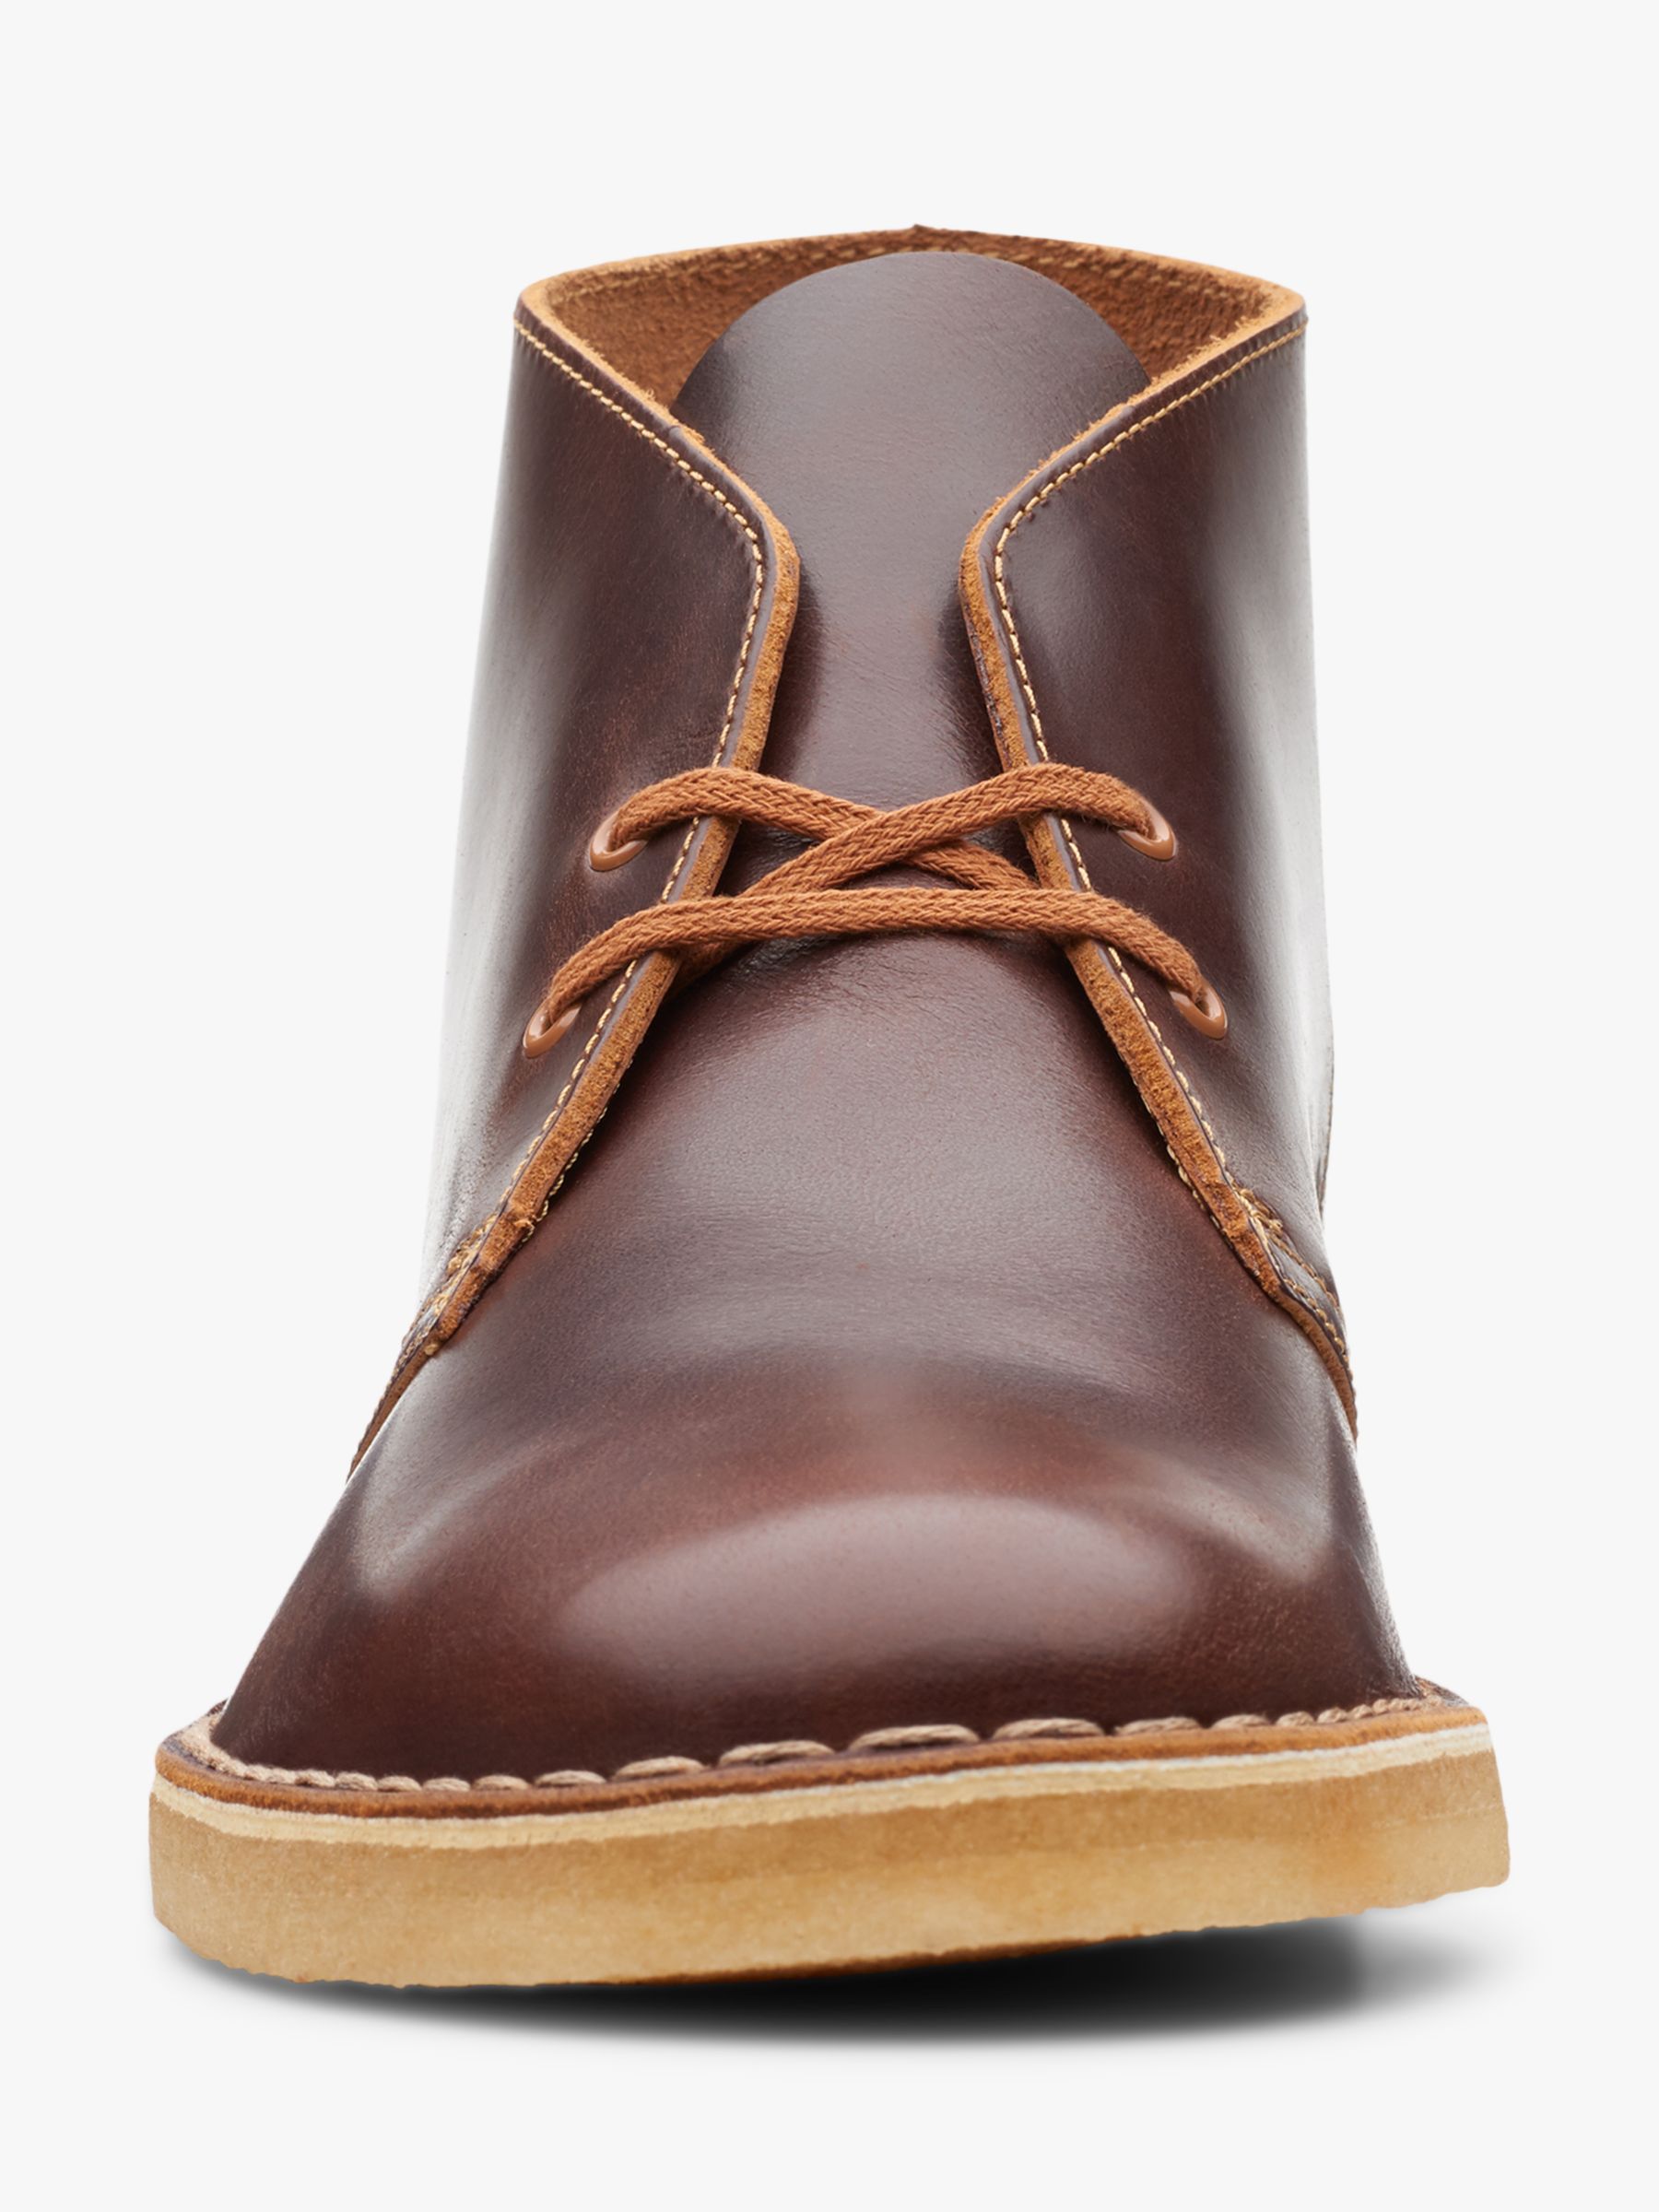 Clarks Originals Leather Desert Boots 